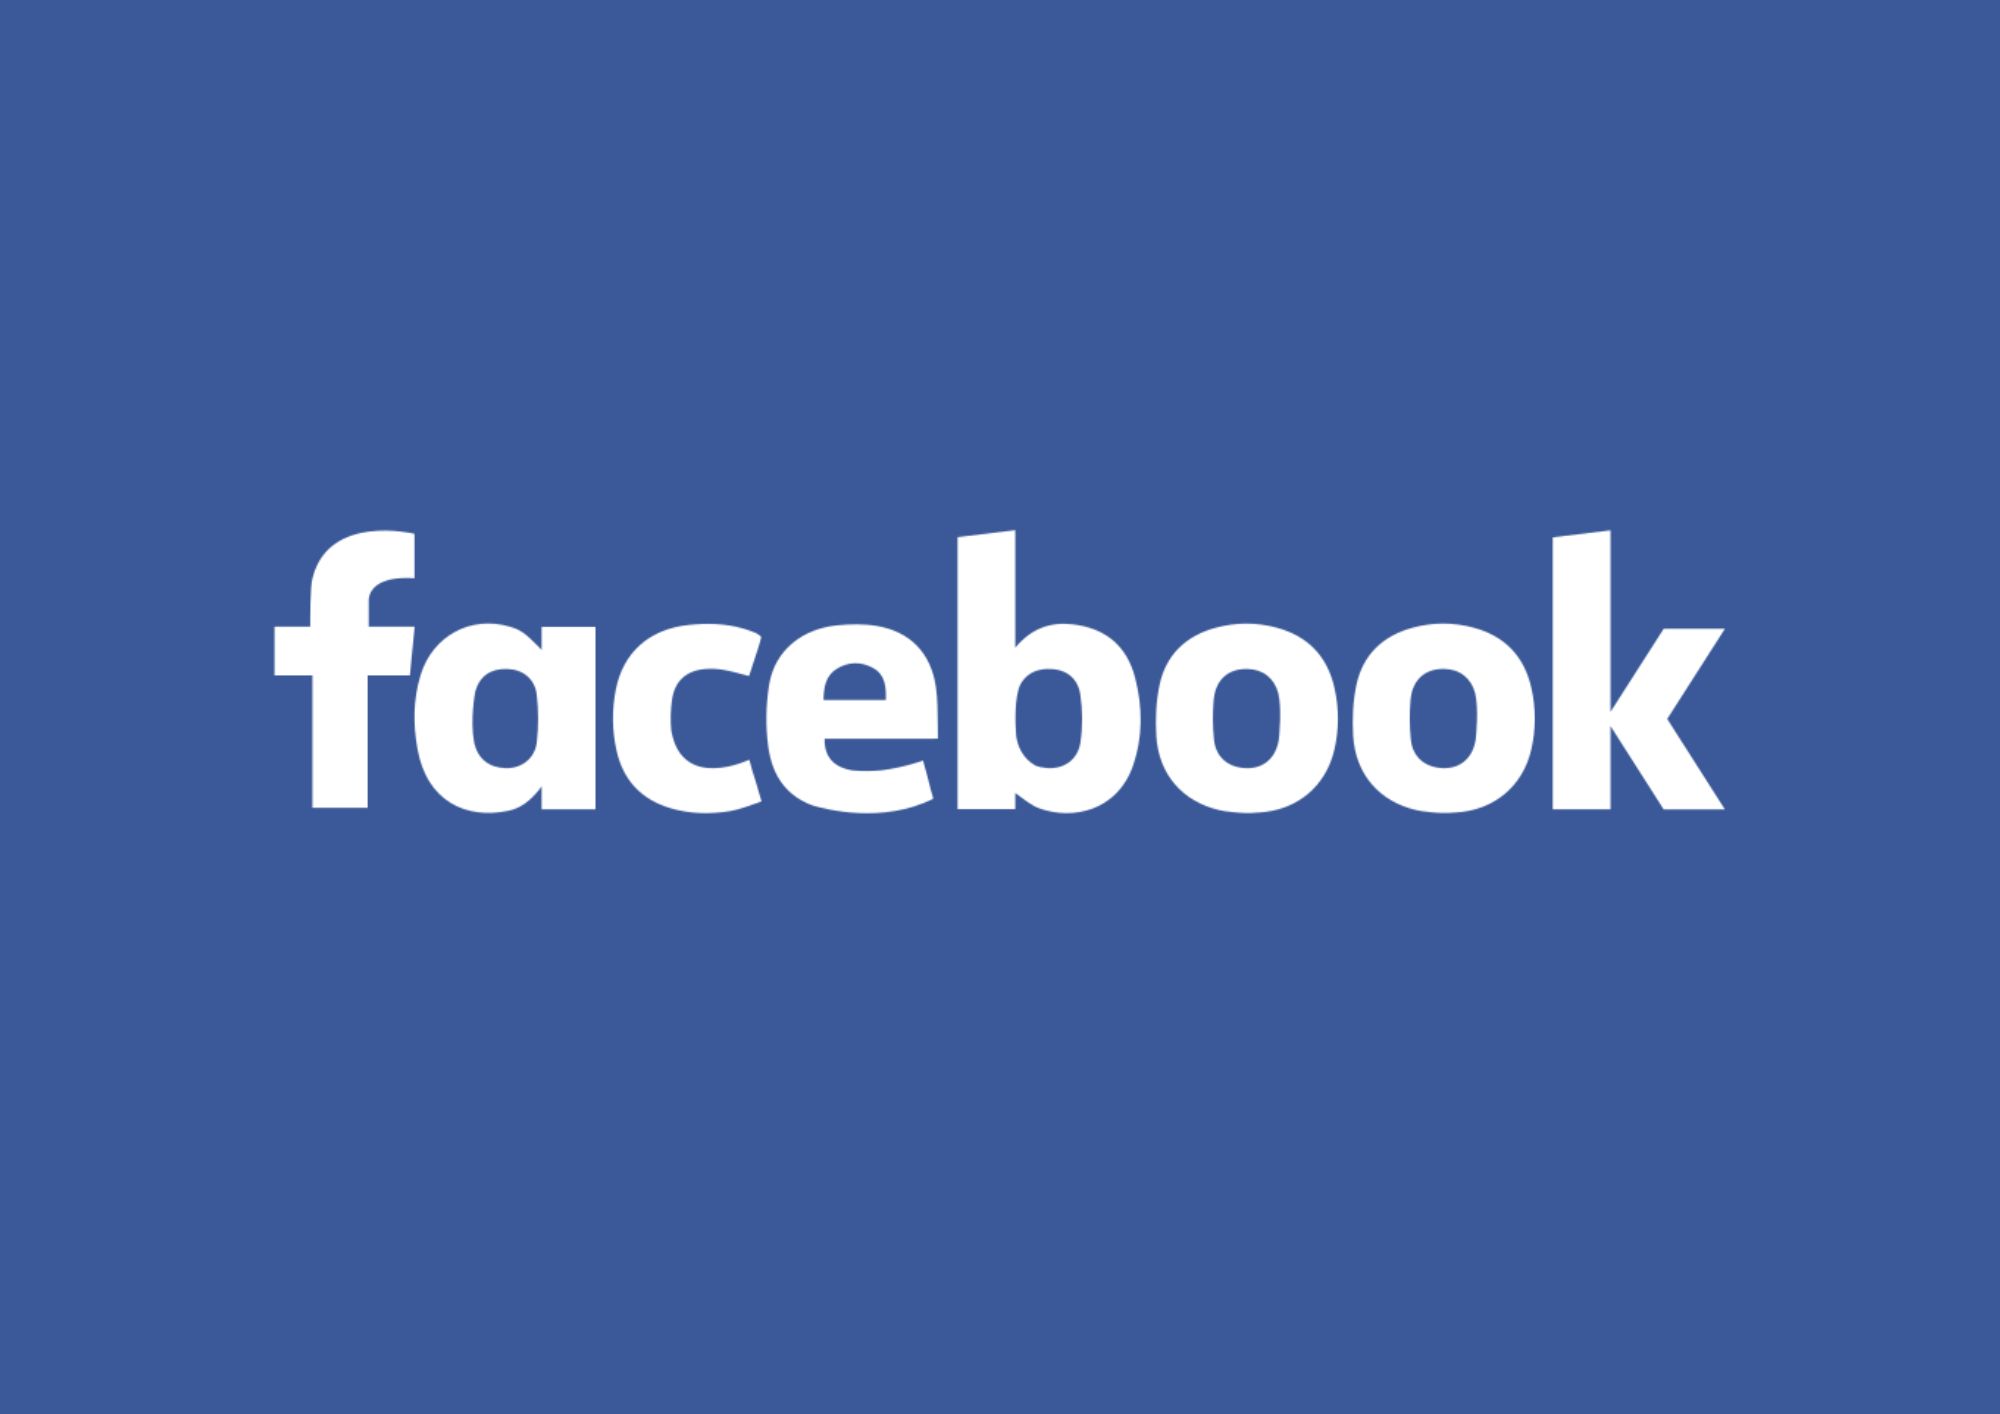 Facebook Ka Full Form Kya Hai | Facebook Full Form In Hindi